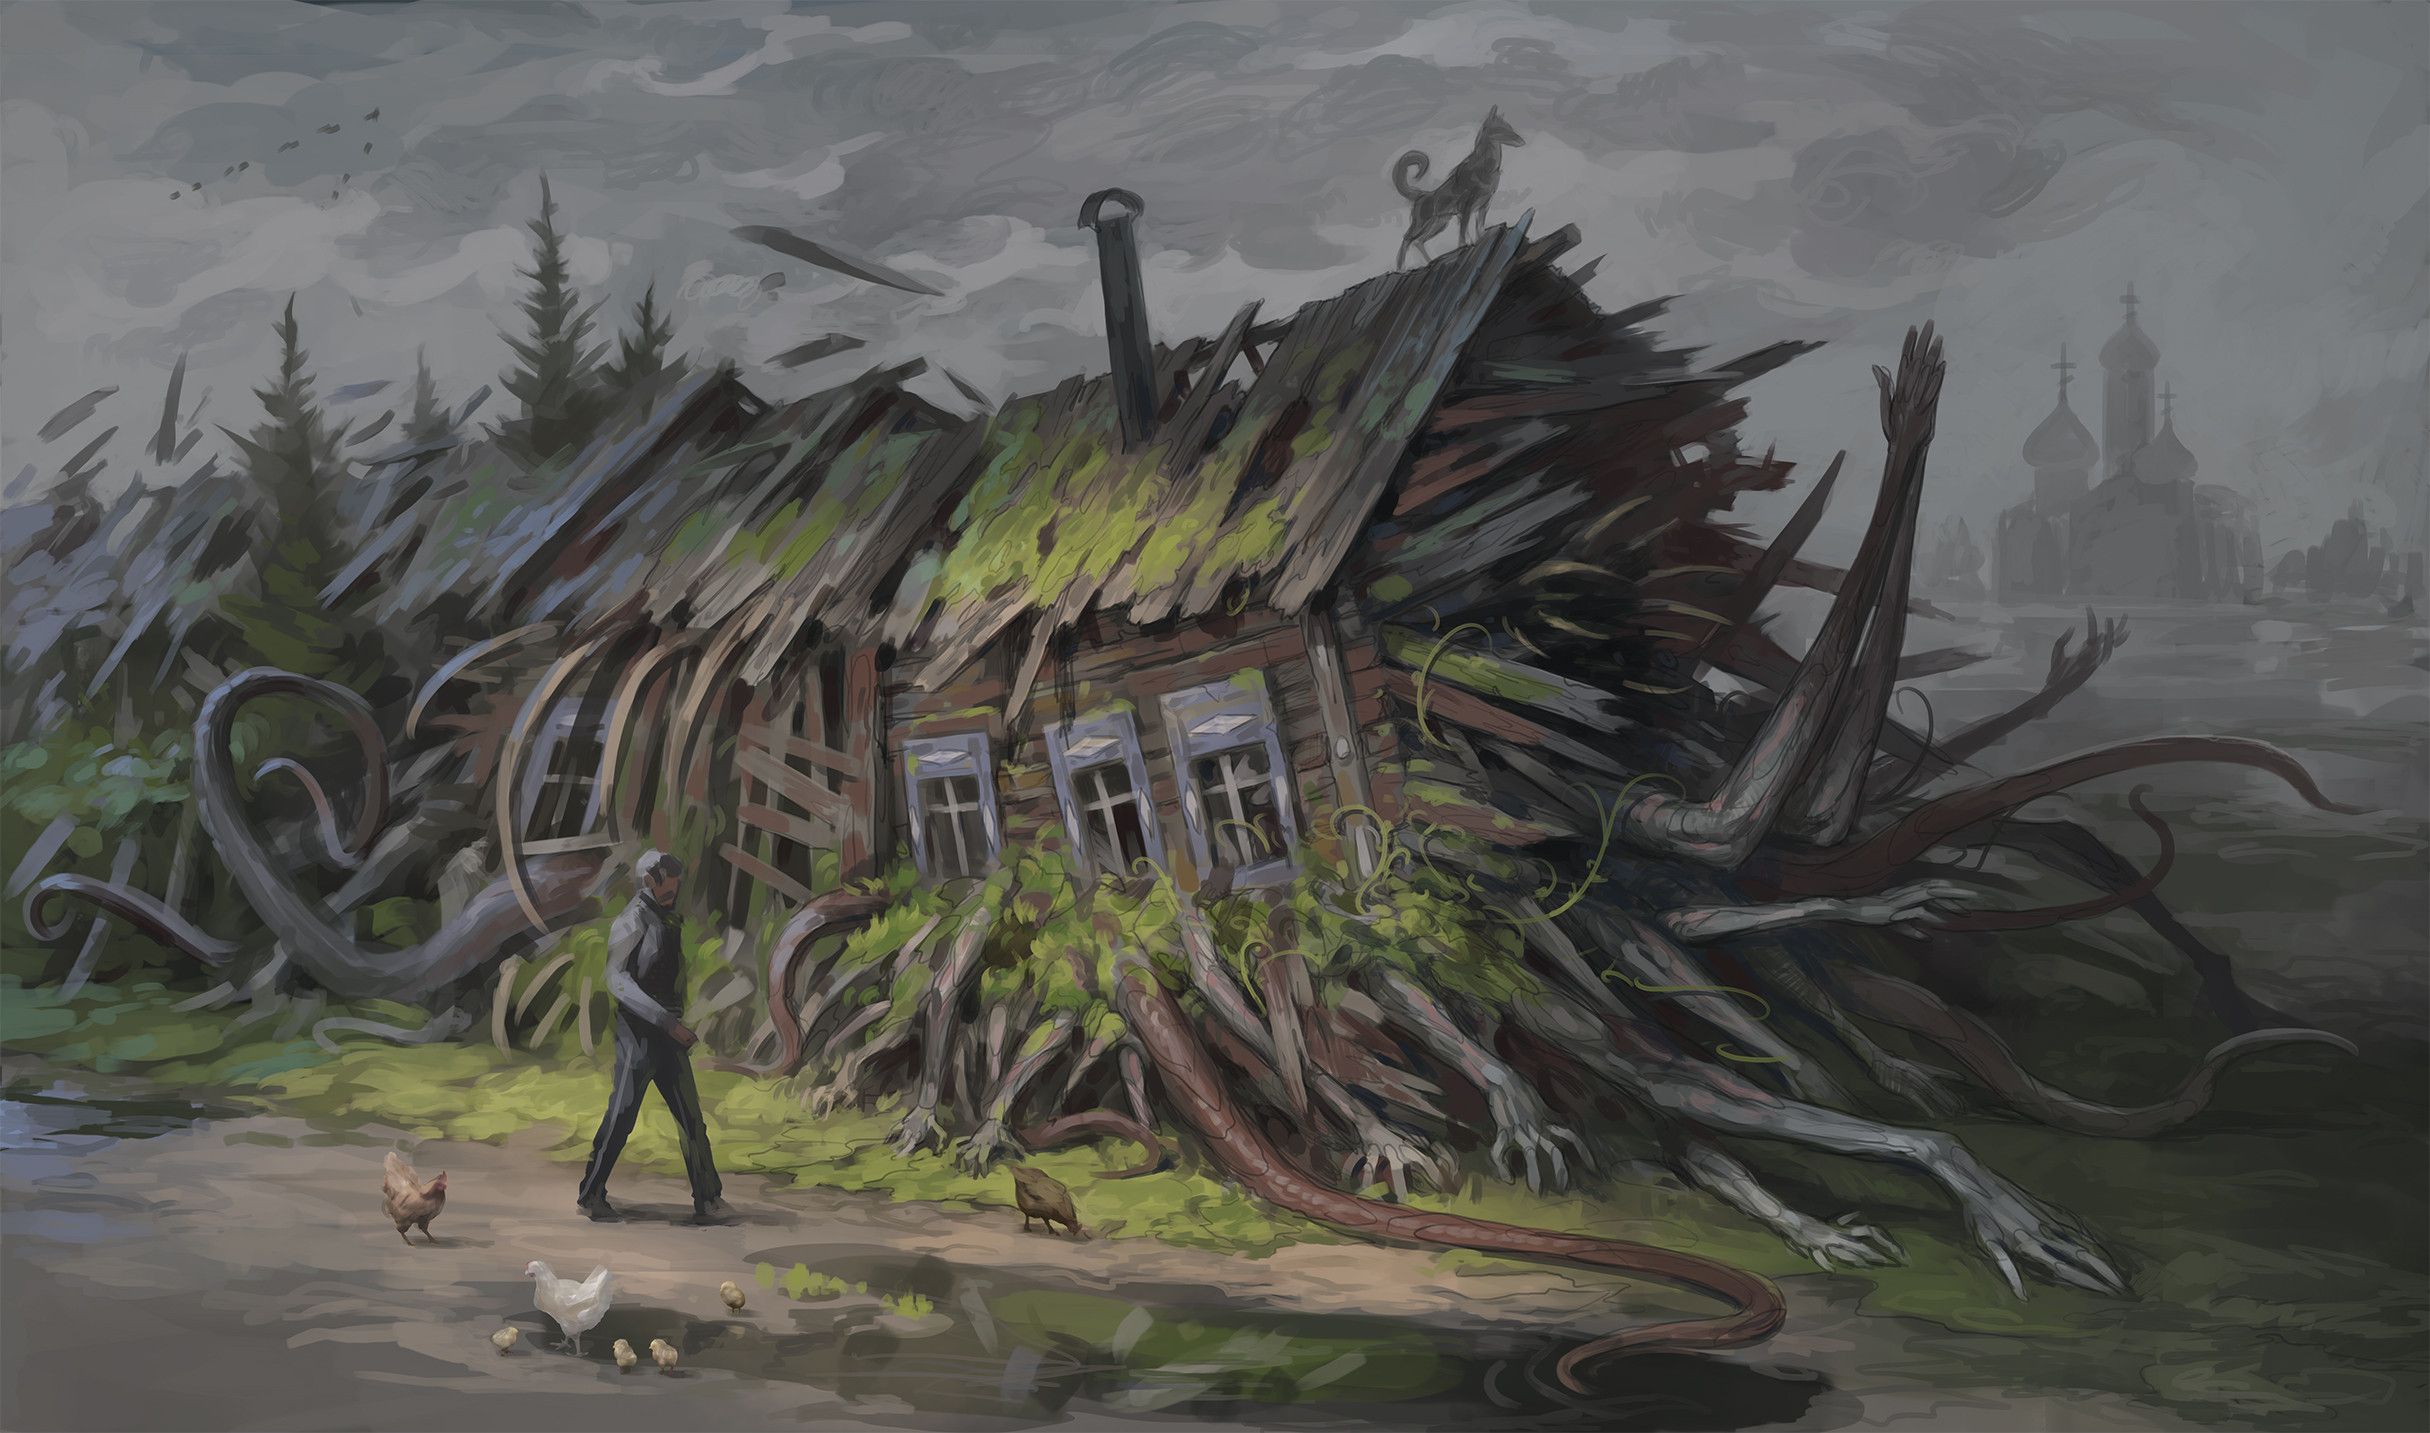 General 2430x1433 digital art artwork Denis Zhbankov creepy fantasy art wooden huts house tentacles church hands men